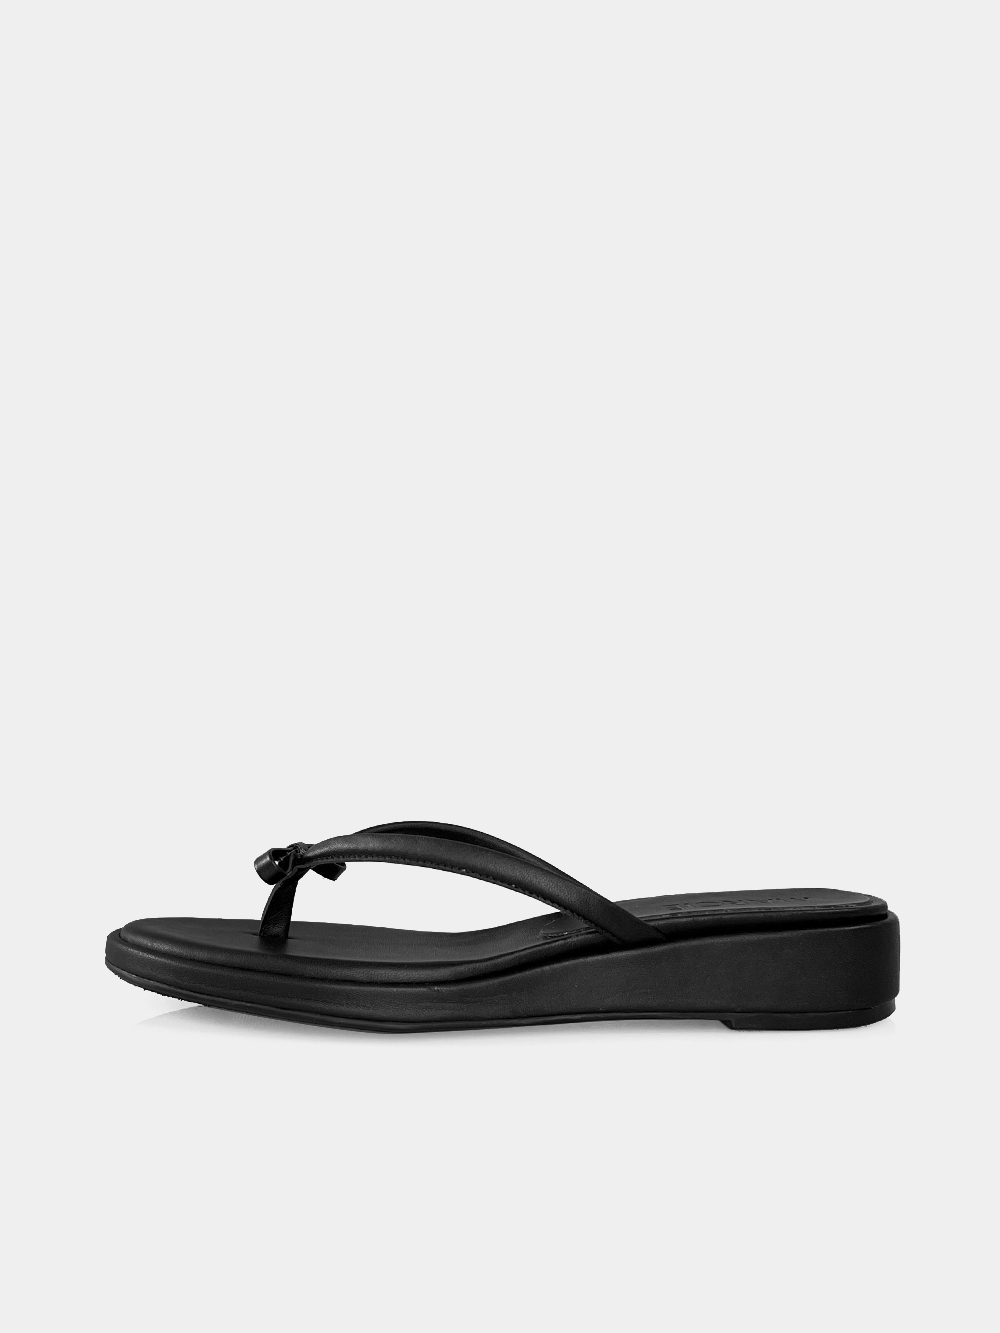 [Out of stock] Mrc104 Ribbon Flip Flops (Black)